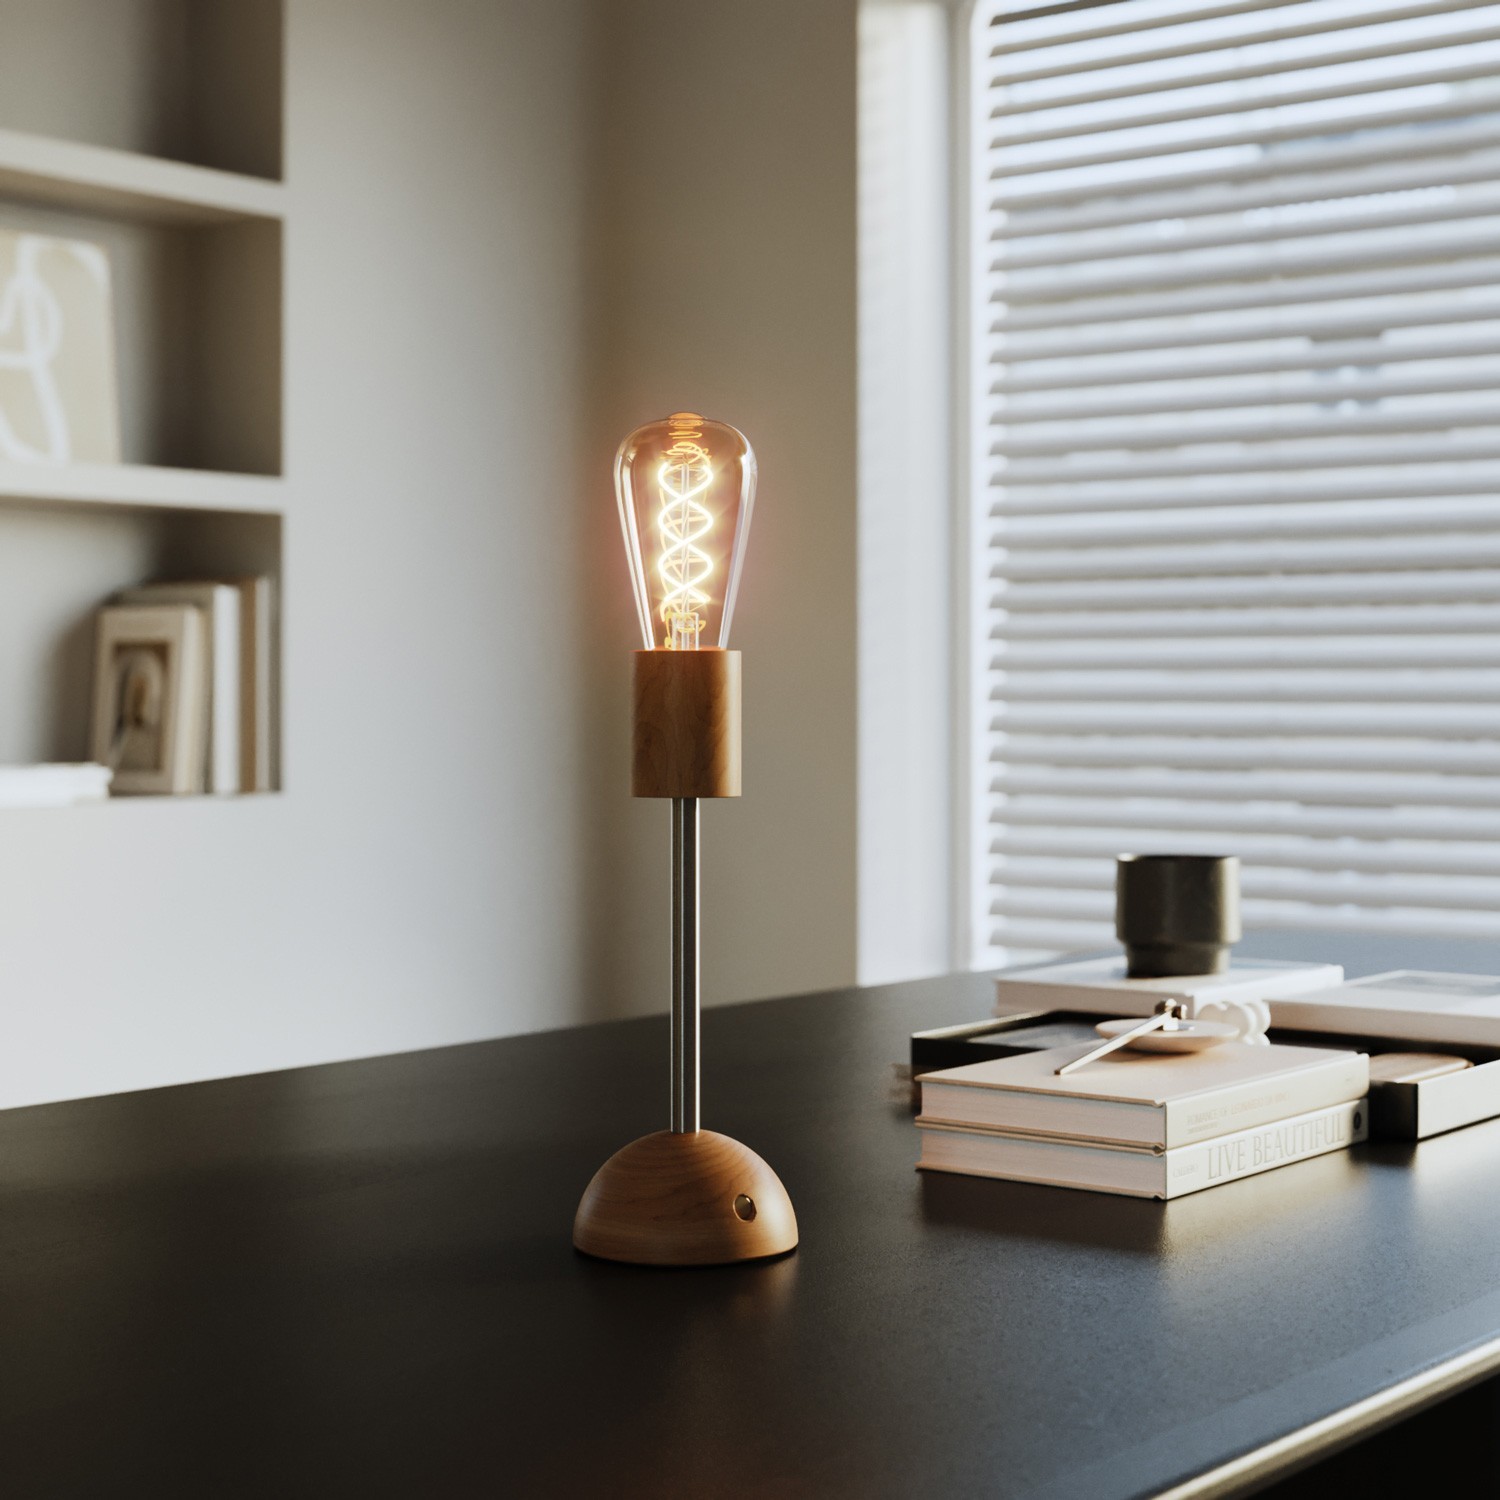 Lampada portatile e ricaricabile Cabless02 con lampadina Edison dorata